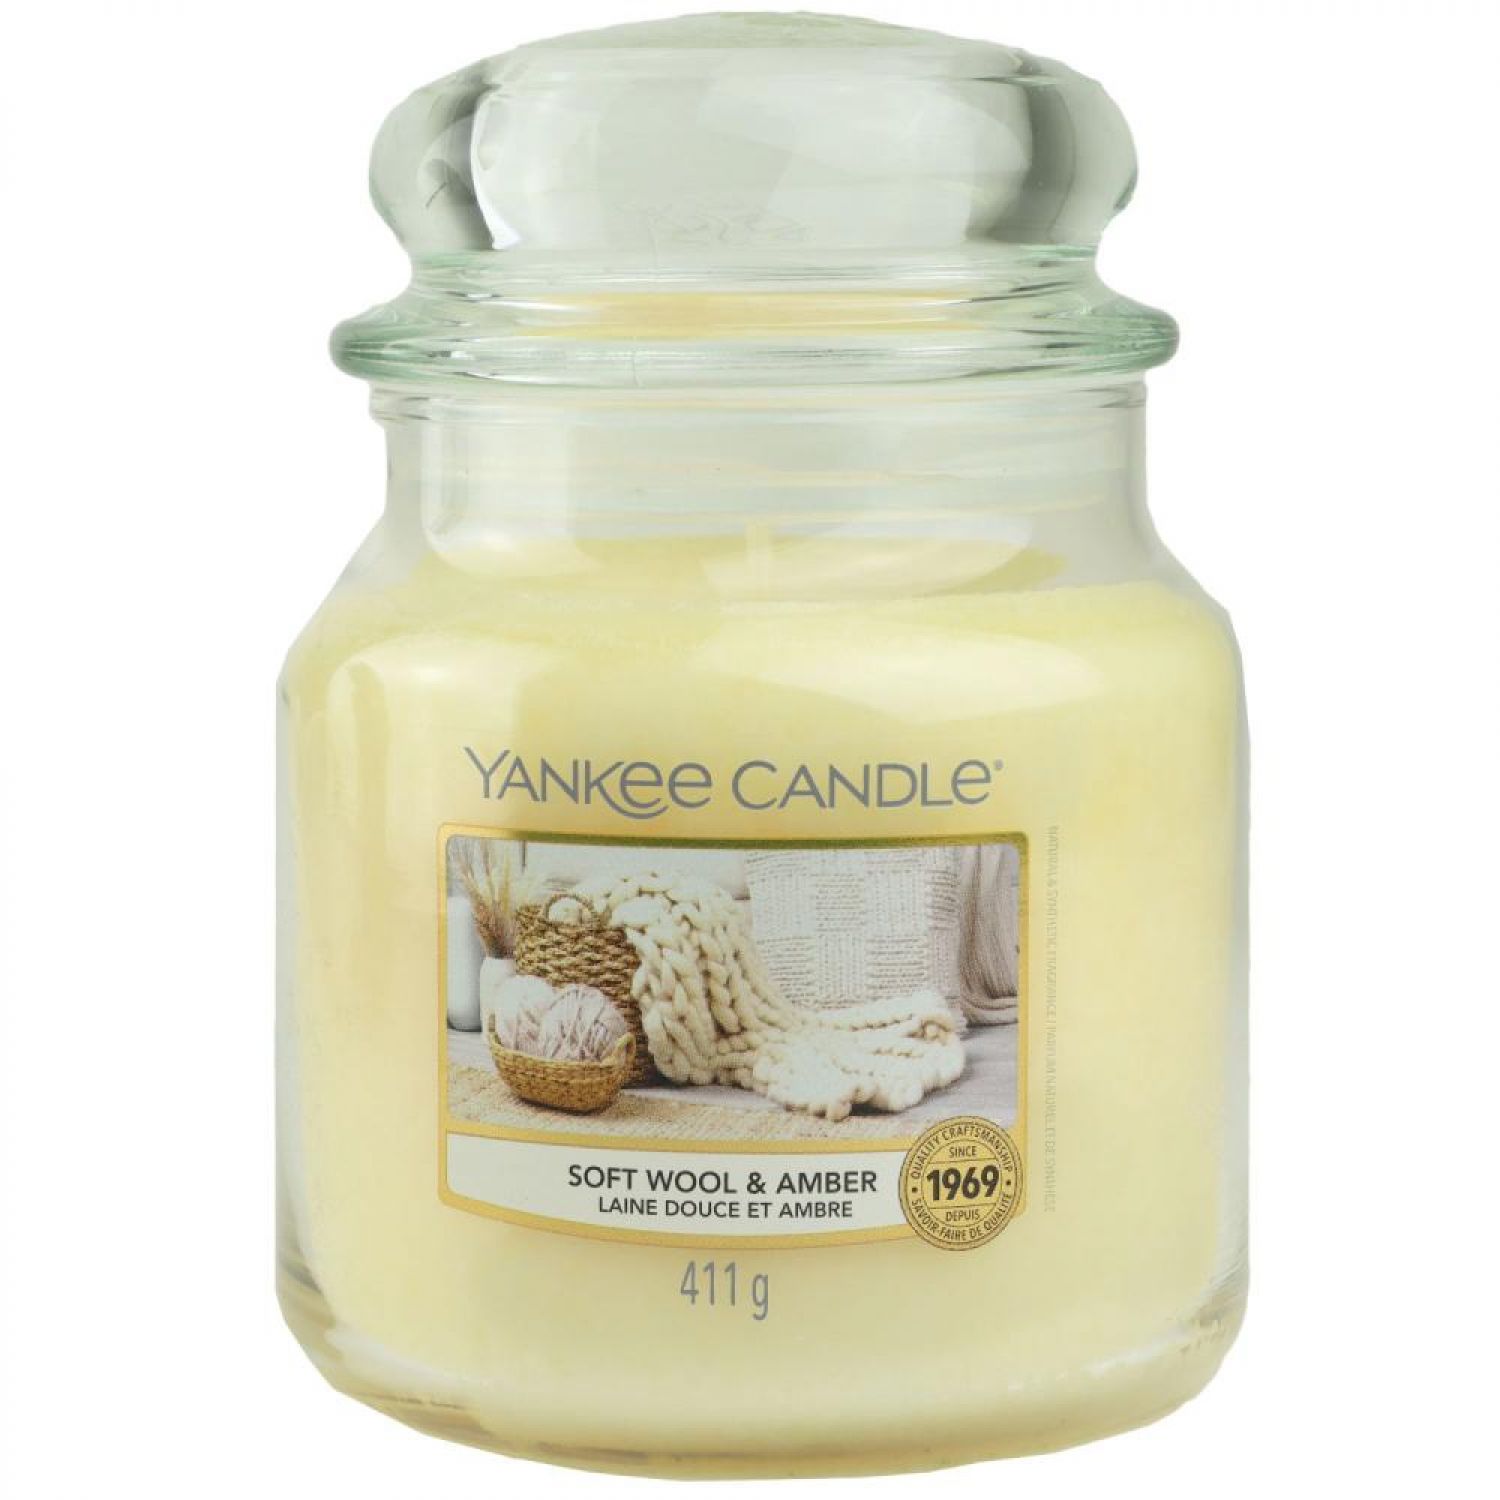 Yankee Candle Duftkerze Soft Wool & Amber im Glas Jar 4